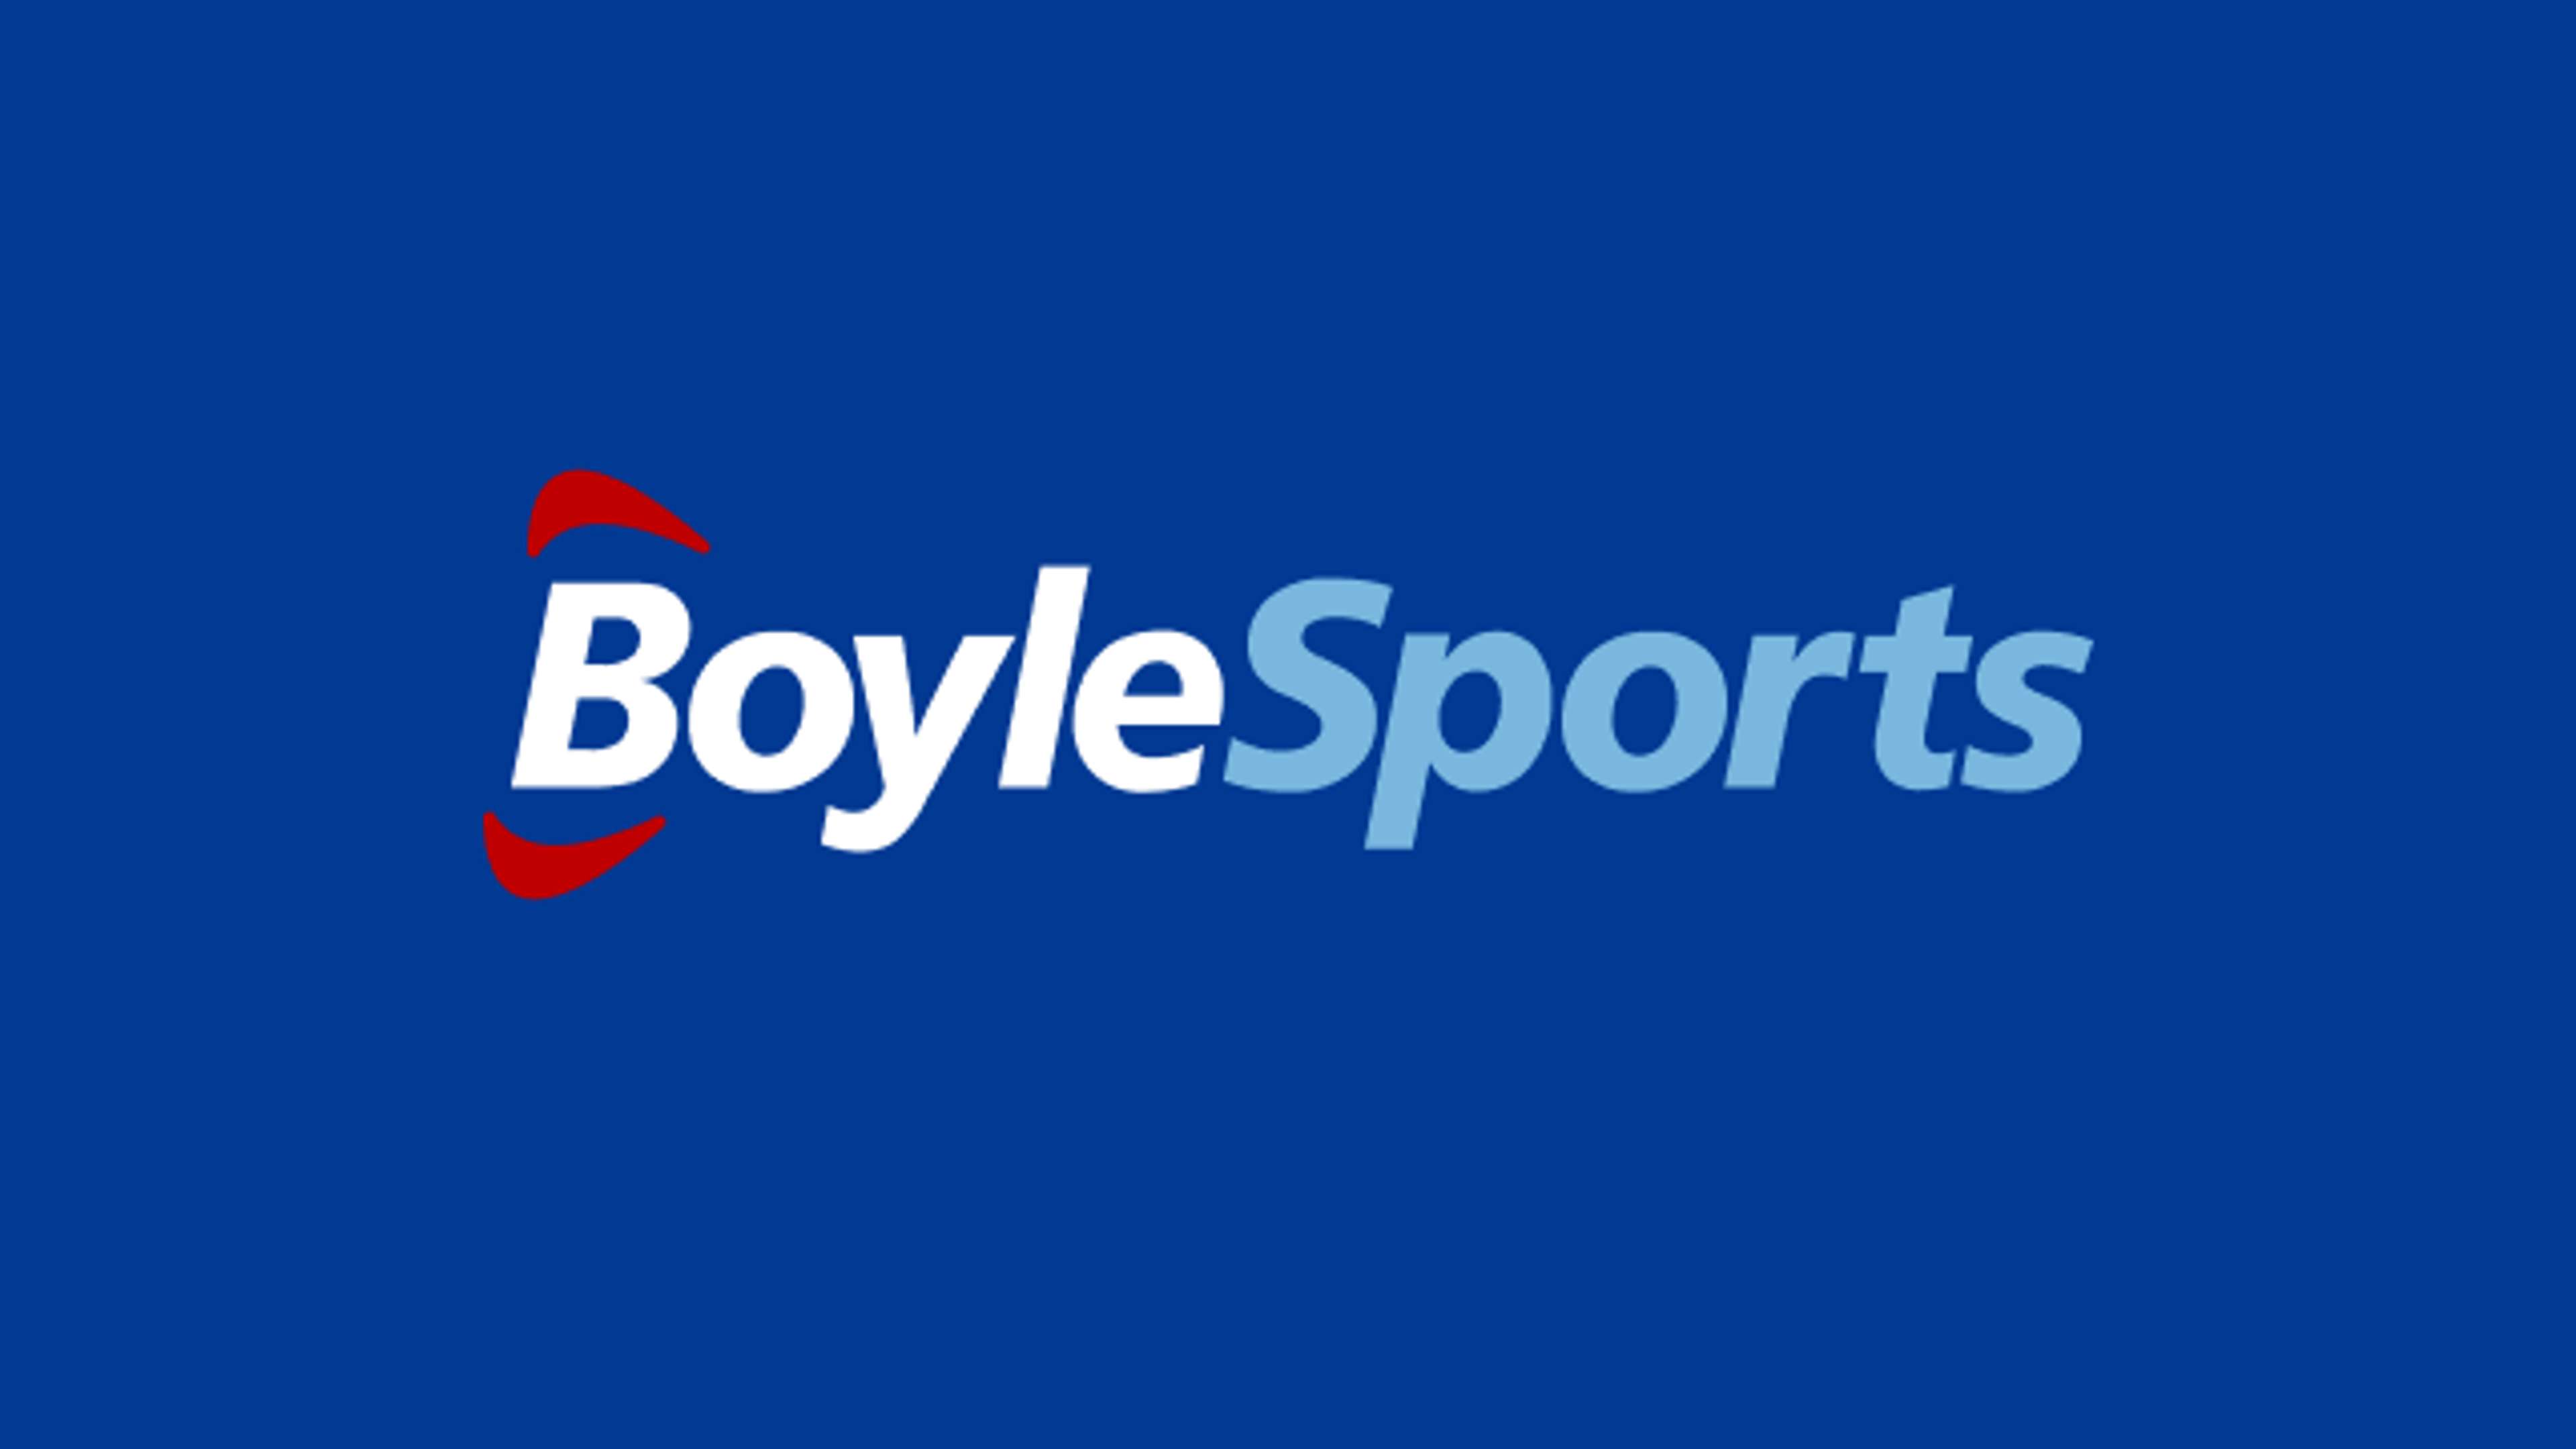 boylesports logo header